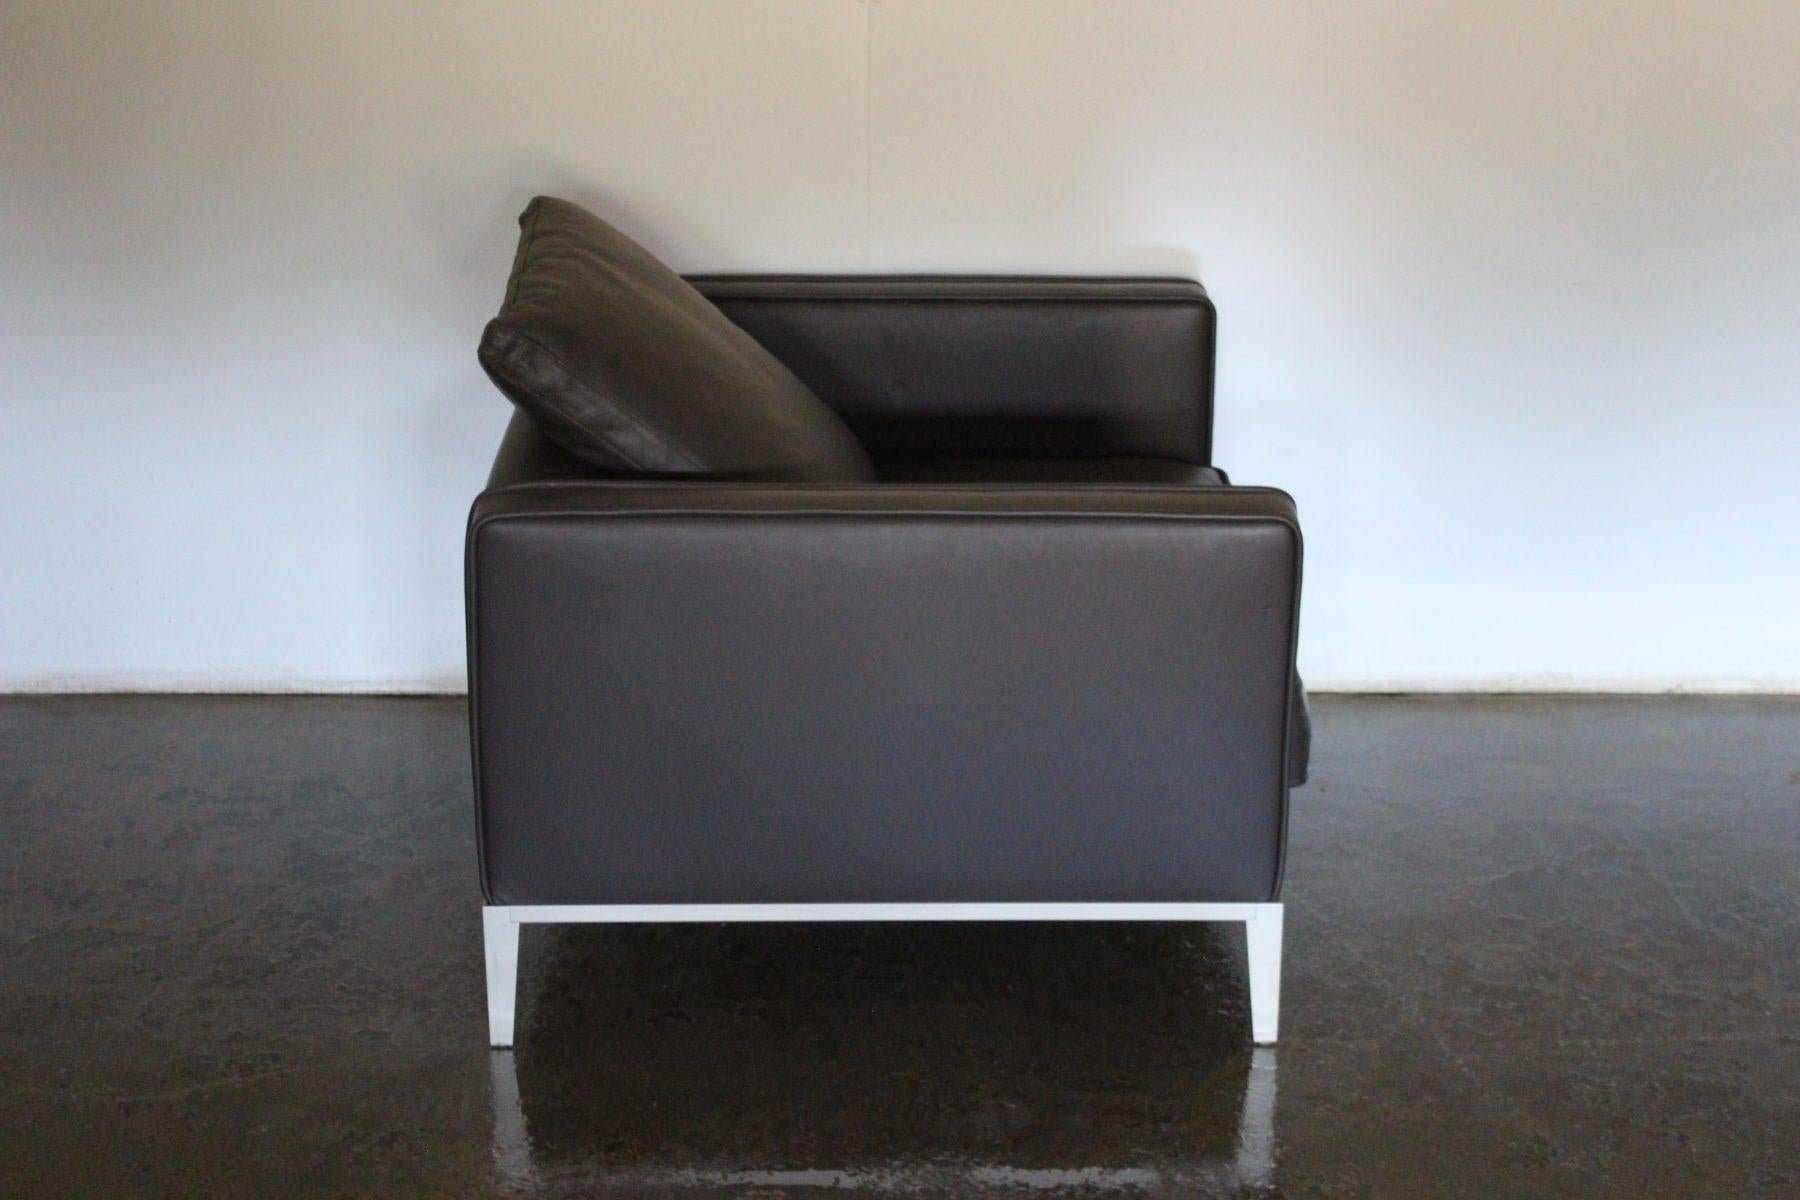 Mint B&B Italia “Simplice” Large Armchair in “Gamma” Dark-Brown Leather For Sale 5